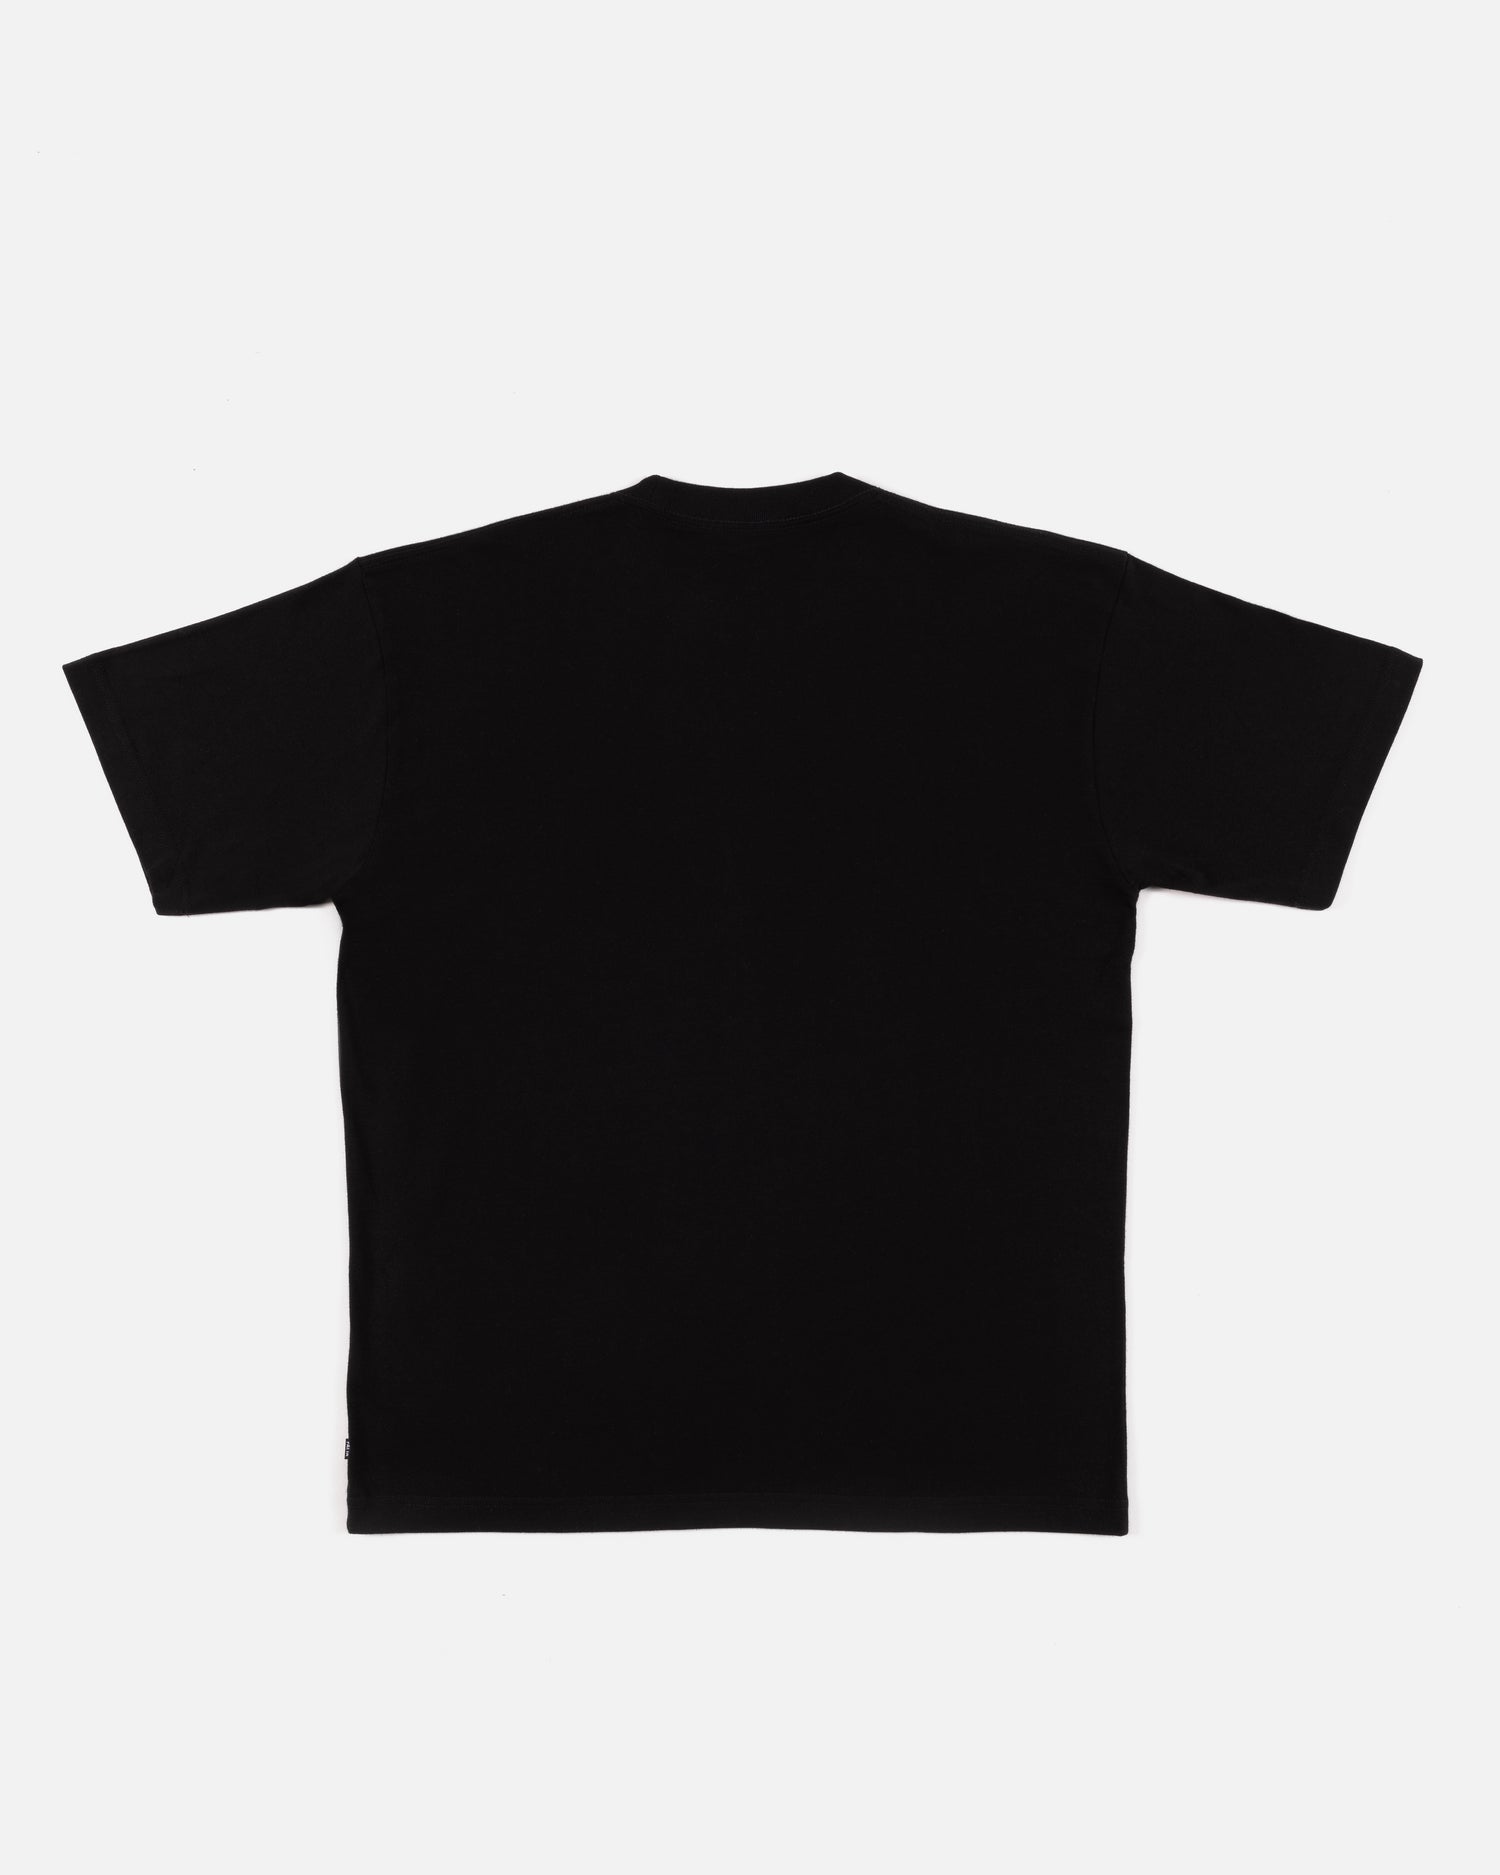 Patta Apple T-Shirt (Black)